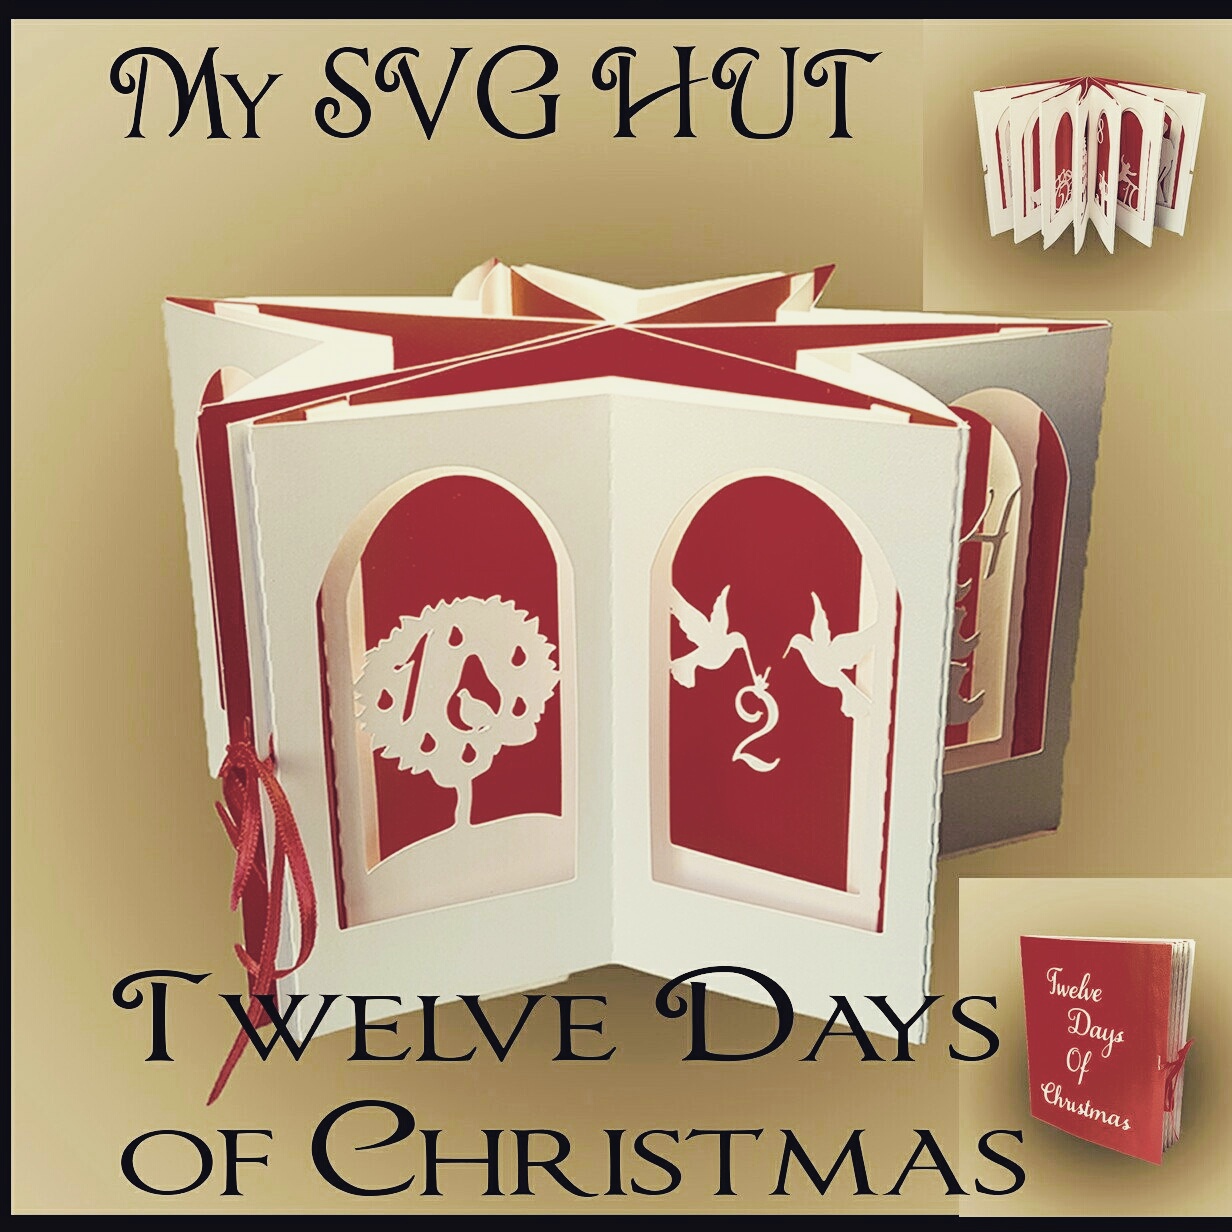 Download My SVG HUT: Twelve days of Christmas pop up carousel card